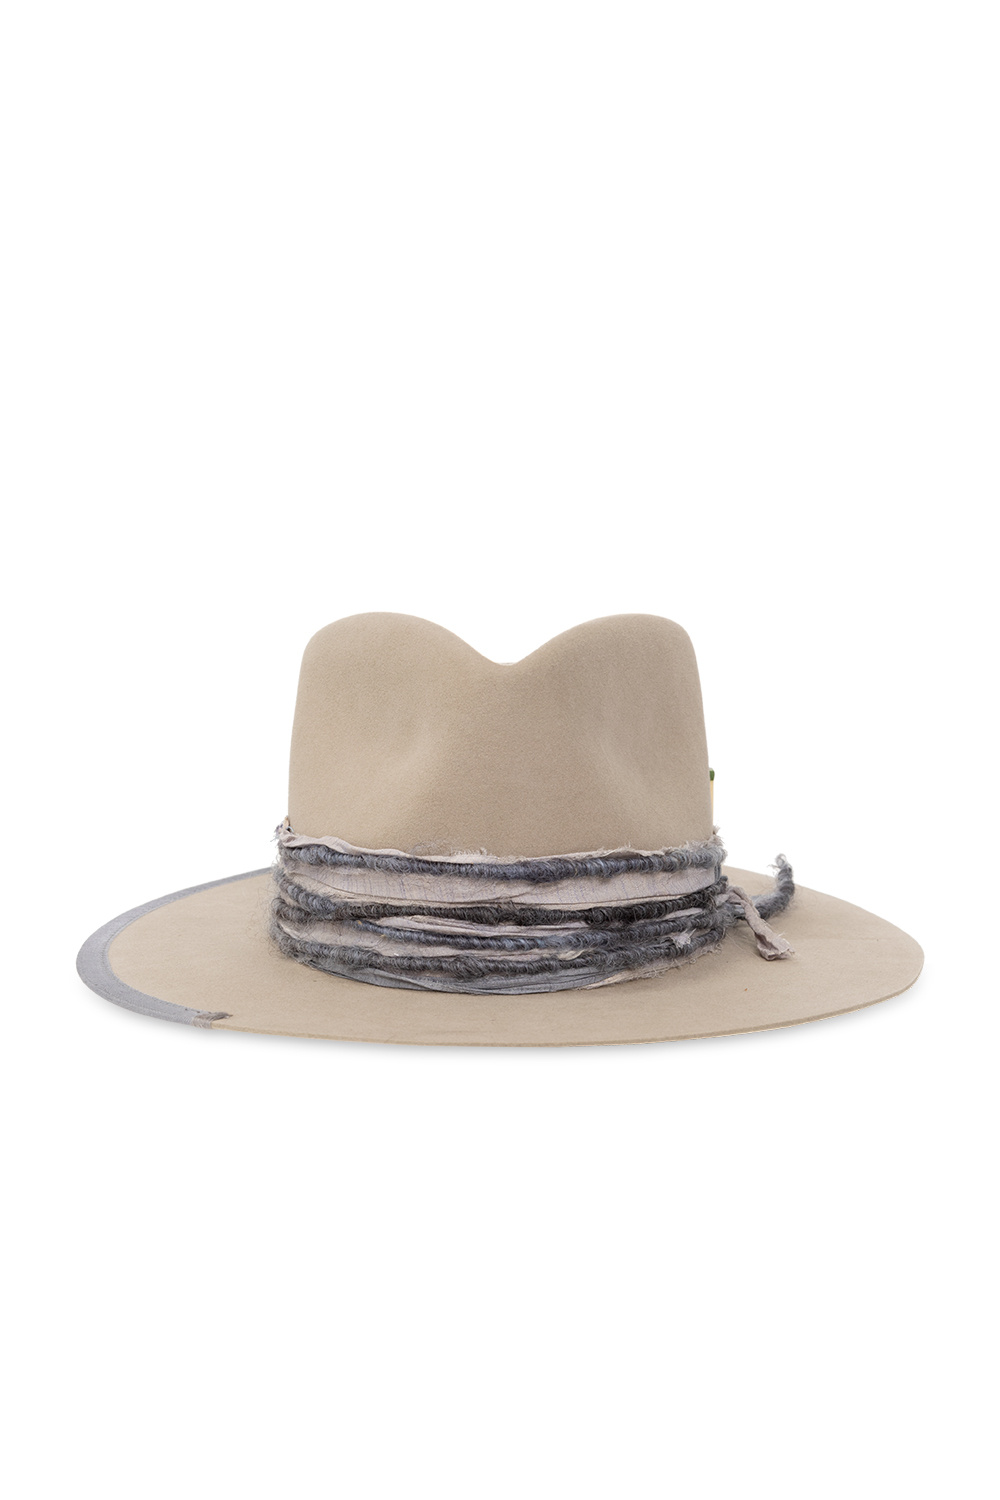 Nick Fouquet ‘Banyon 2.0’ felt uses hat